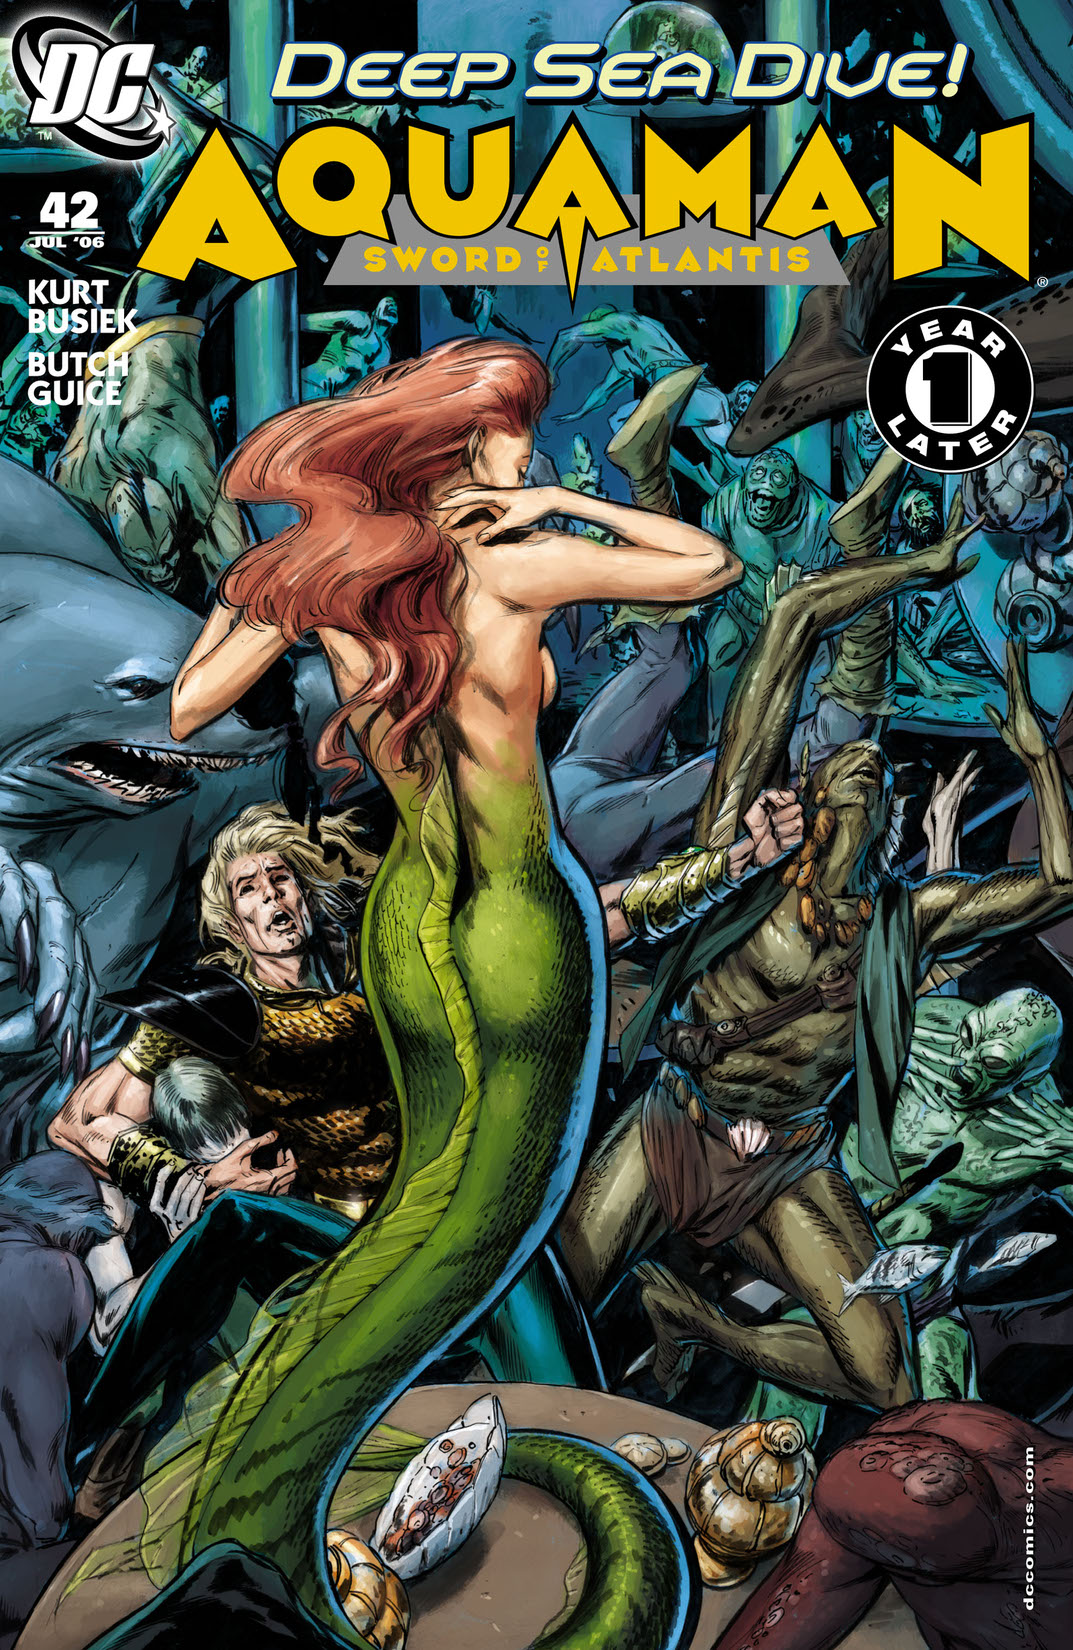 Aquaman: Sword of Atlantis #42 preview images